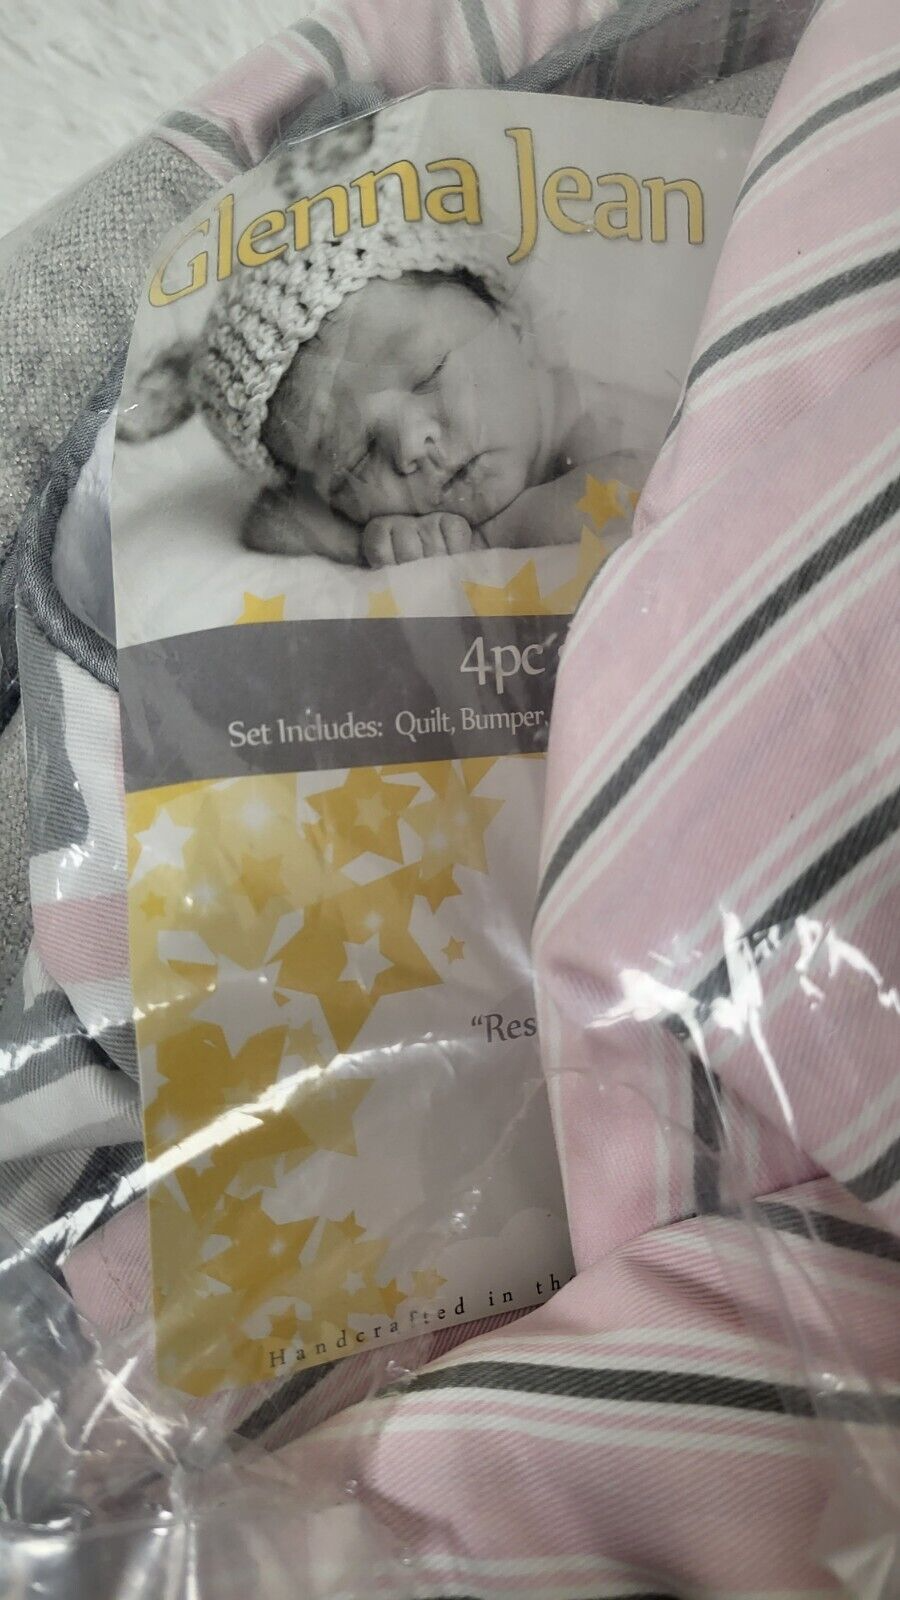 Glenna Jean 床上用品婴儿床套装粉色/奶油色 4 件套